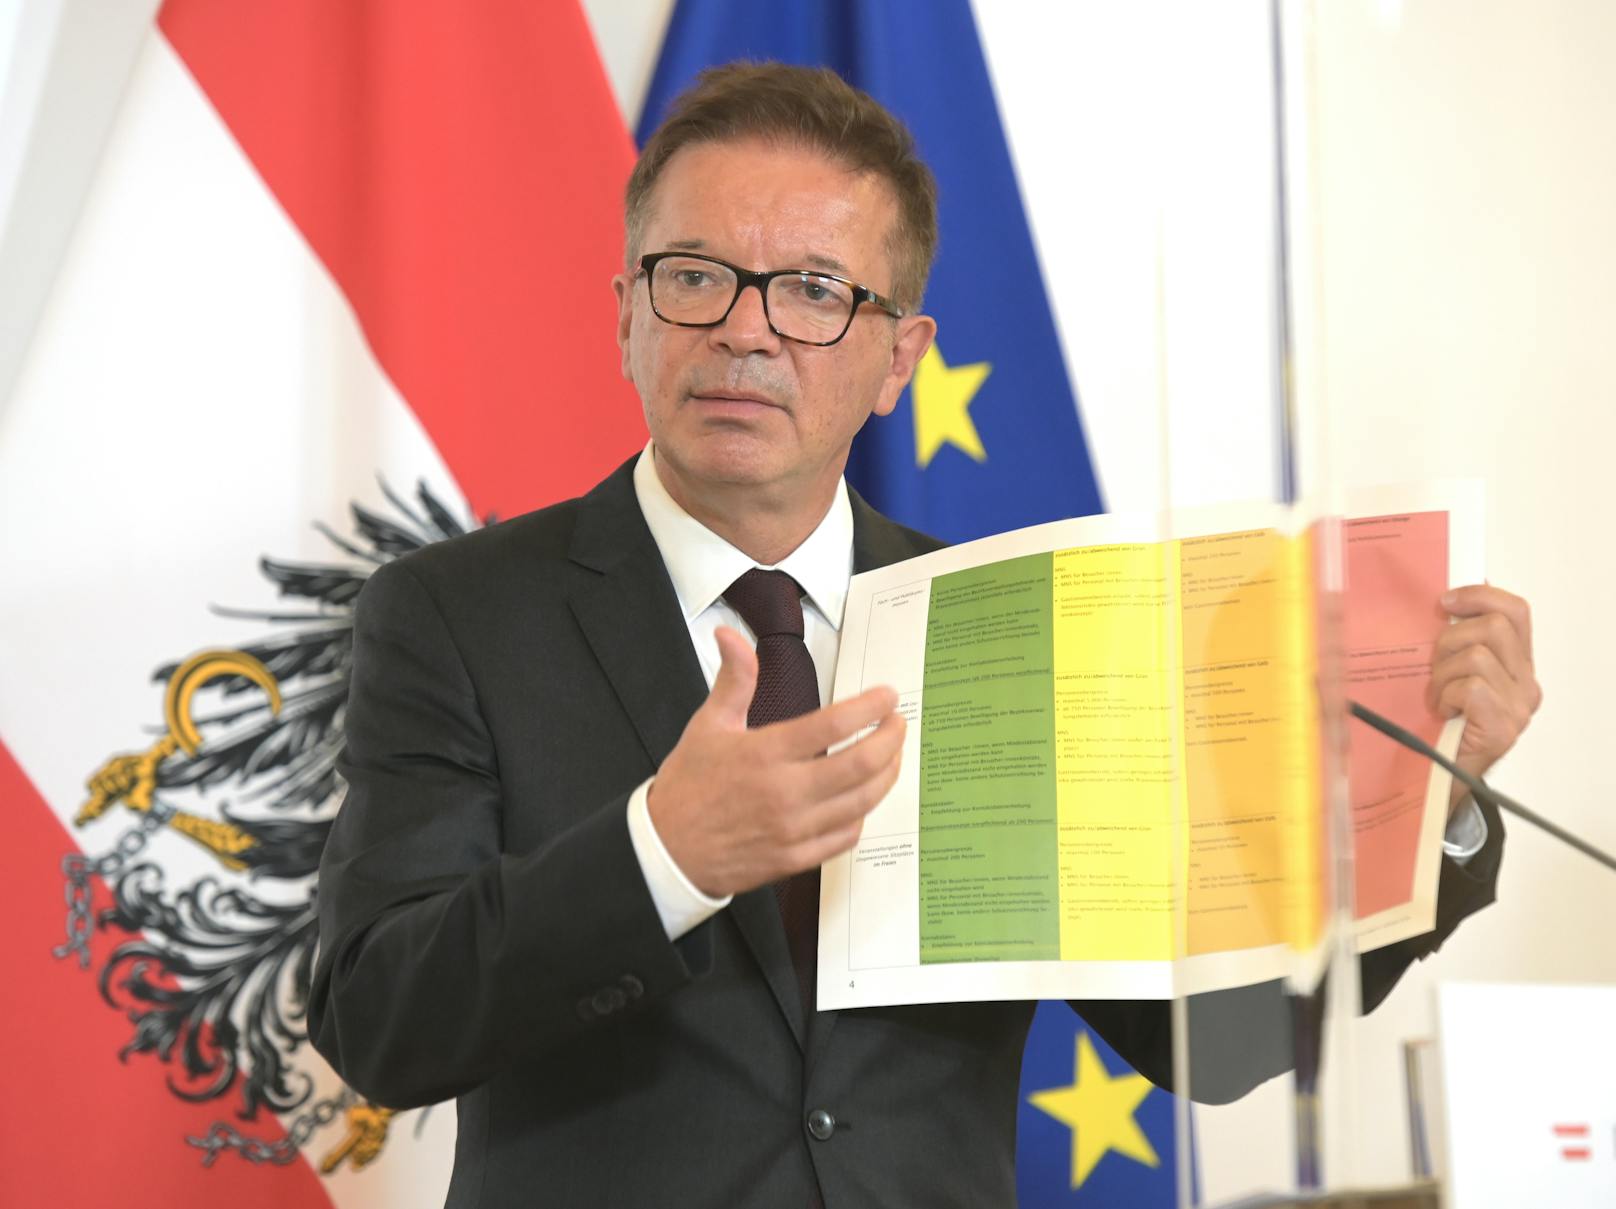 Gesundheitsminister Rudolf Anschober (Grüne) bei der Präsentation der Corona-Ampel am 4. September 2020